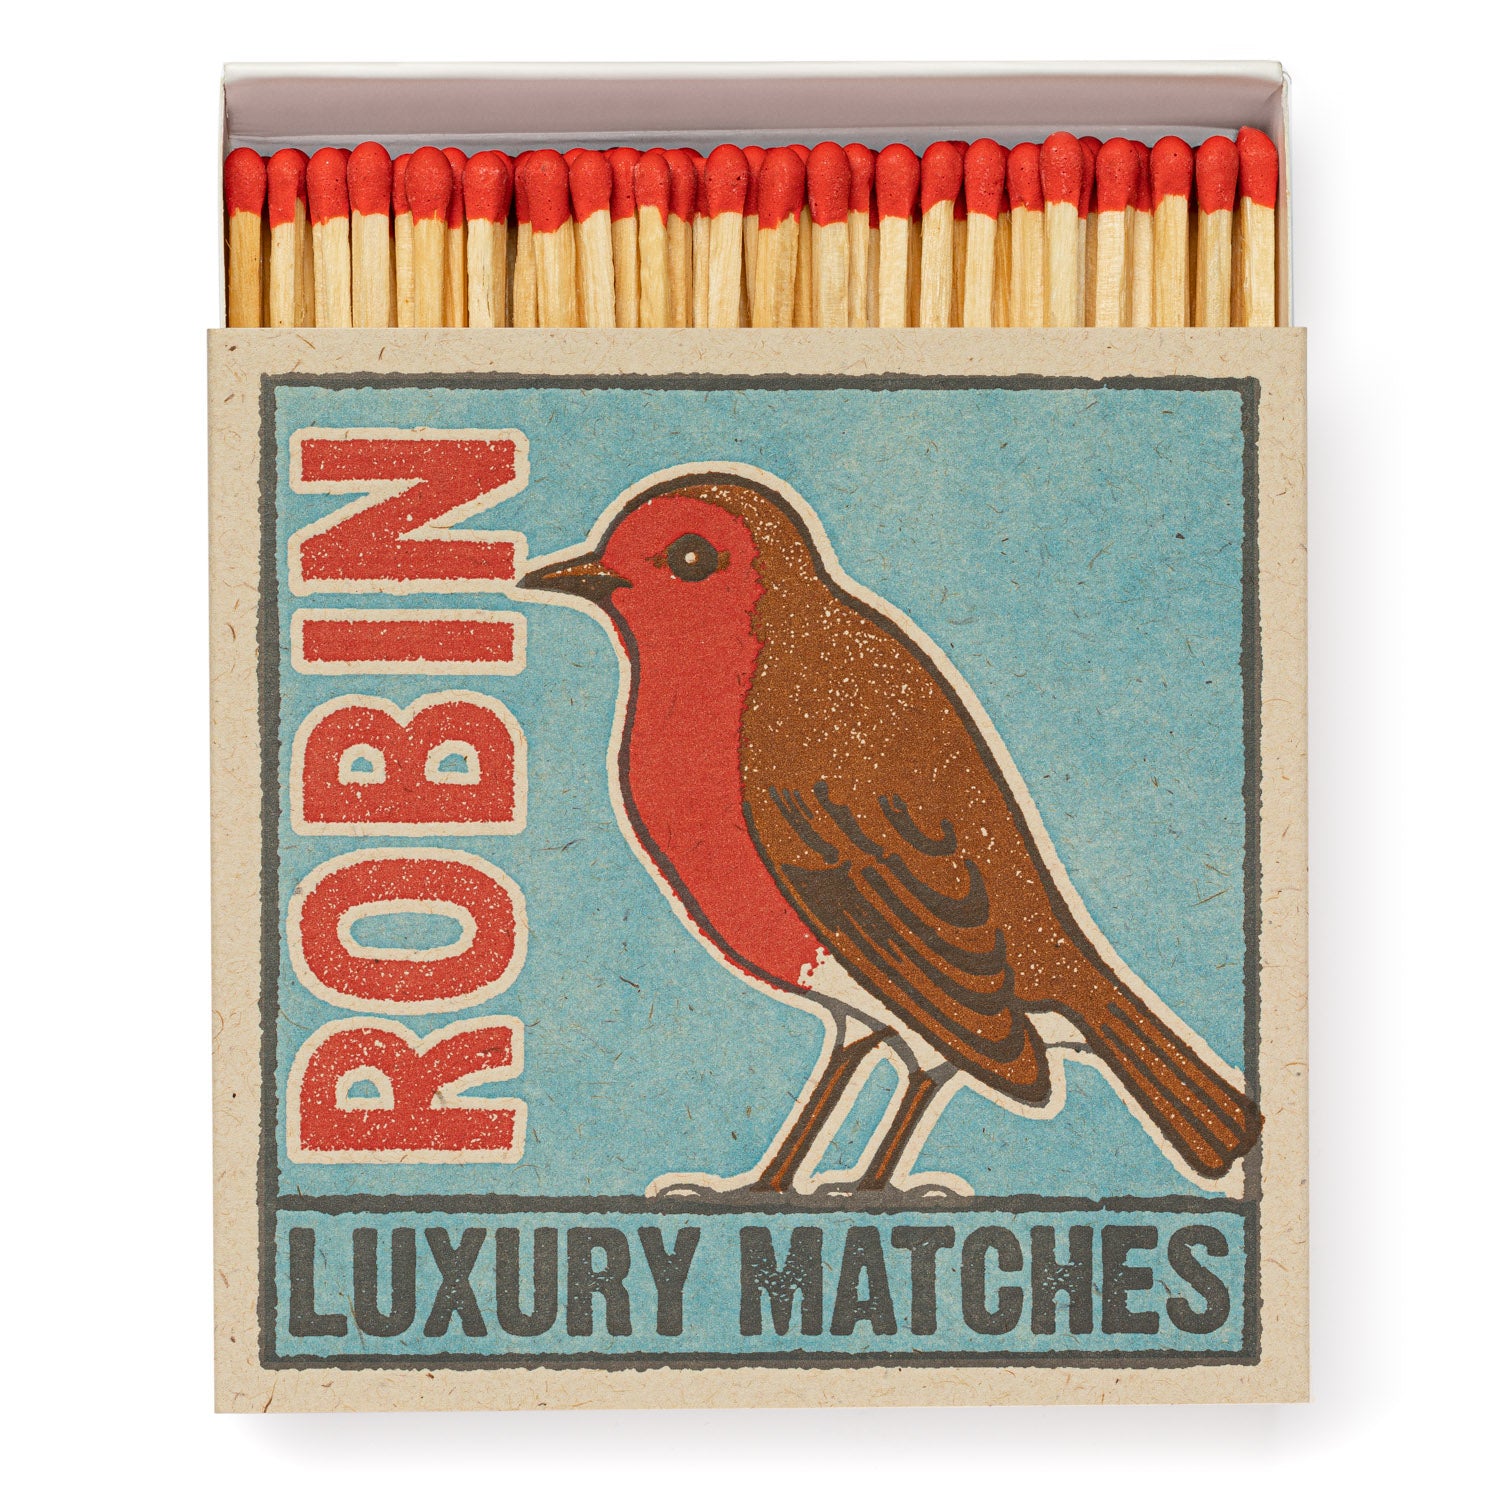 The Robin matchbox